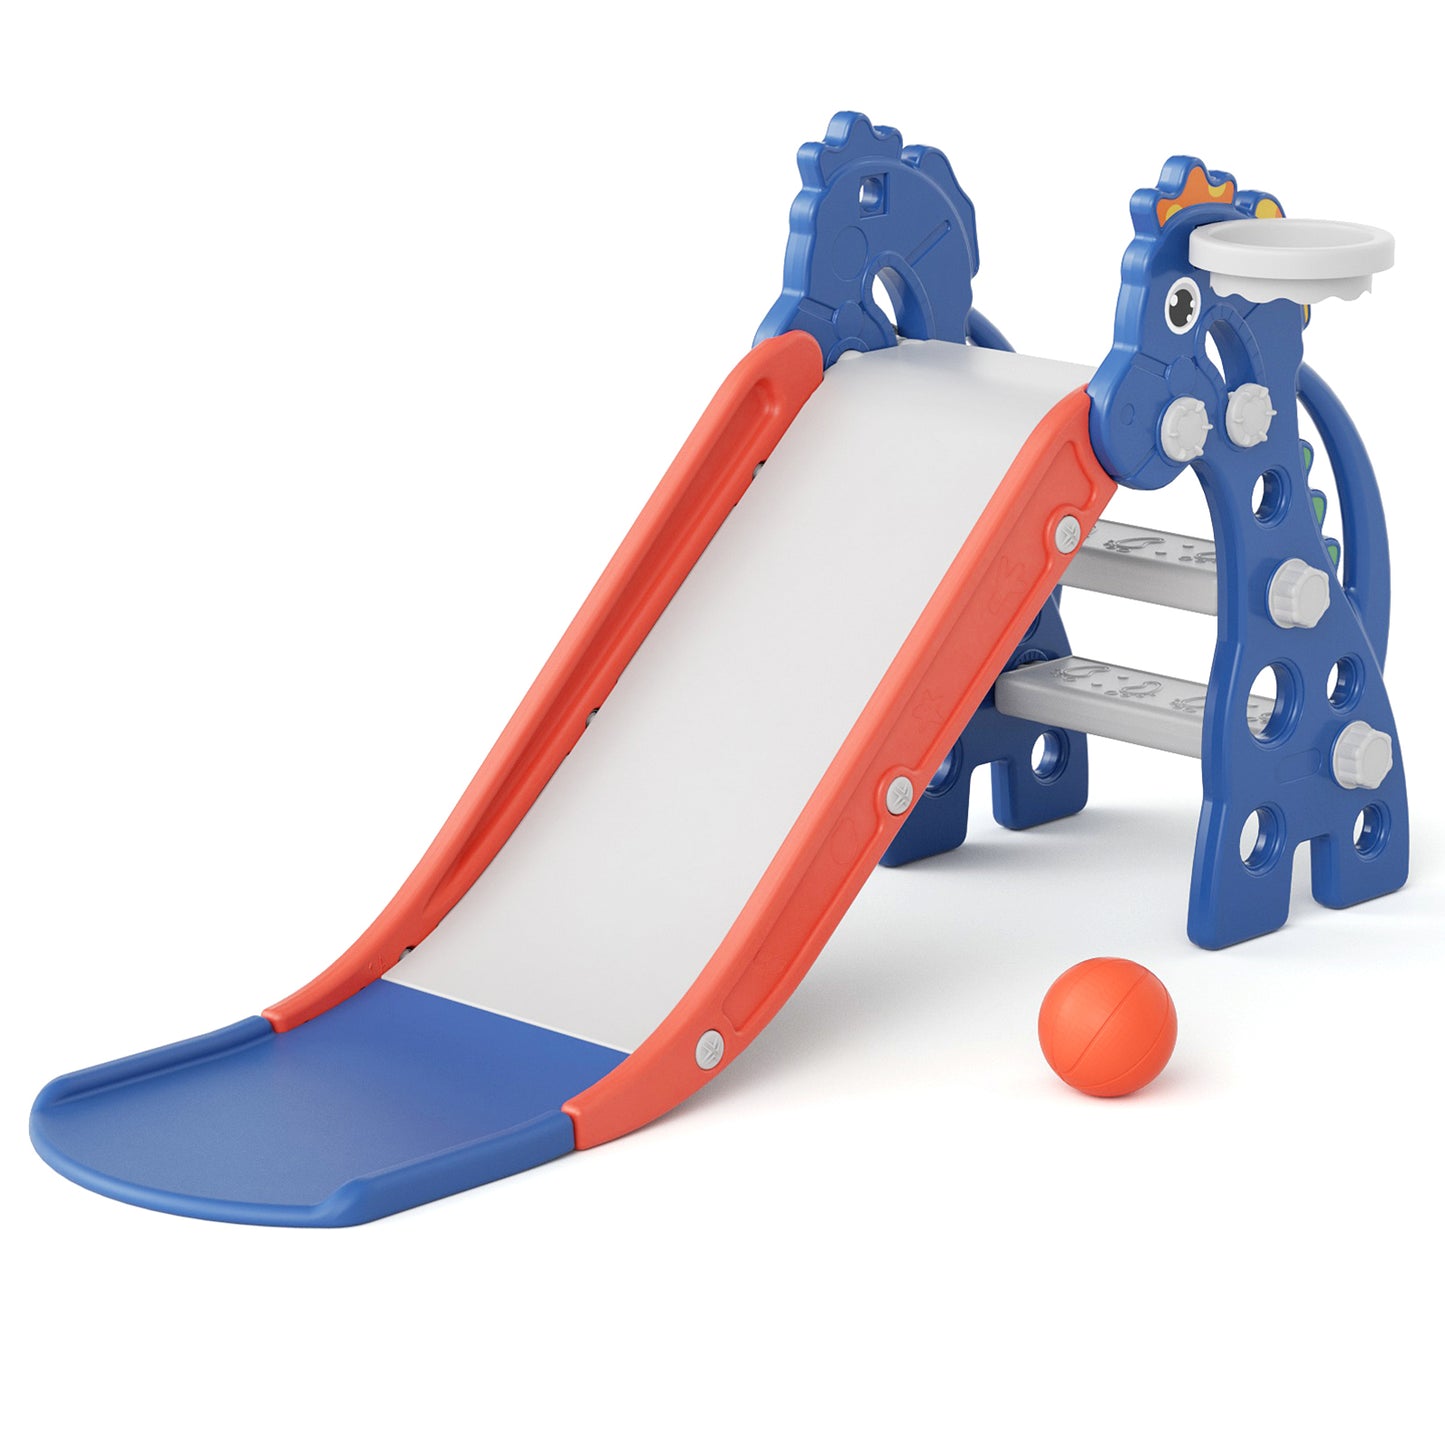 Kids Slide for Baby Toddlers Age 1-3, Toddler Slides Outdoor & Indoor for Kids with Basketball Hoop, Plastic Freestanding Slide Climber Playset Outdoor for Boys Girls (Blue)